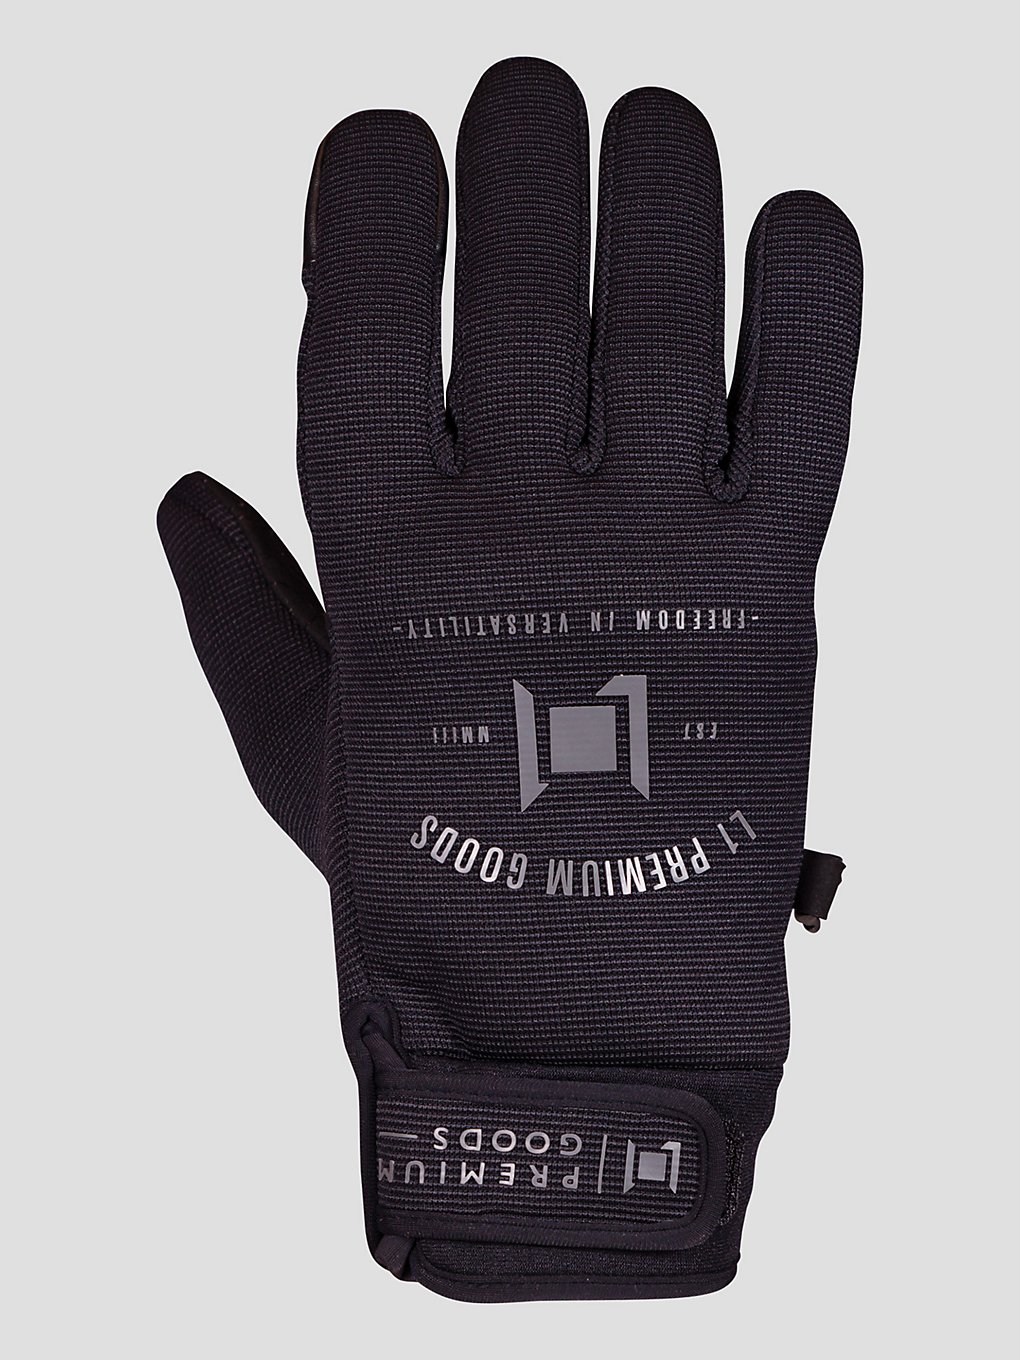 L1 Rima Handschuhe black